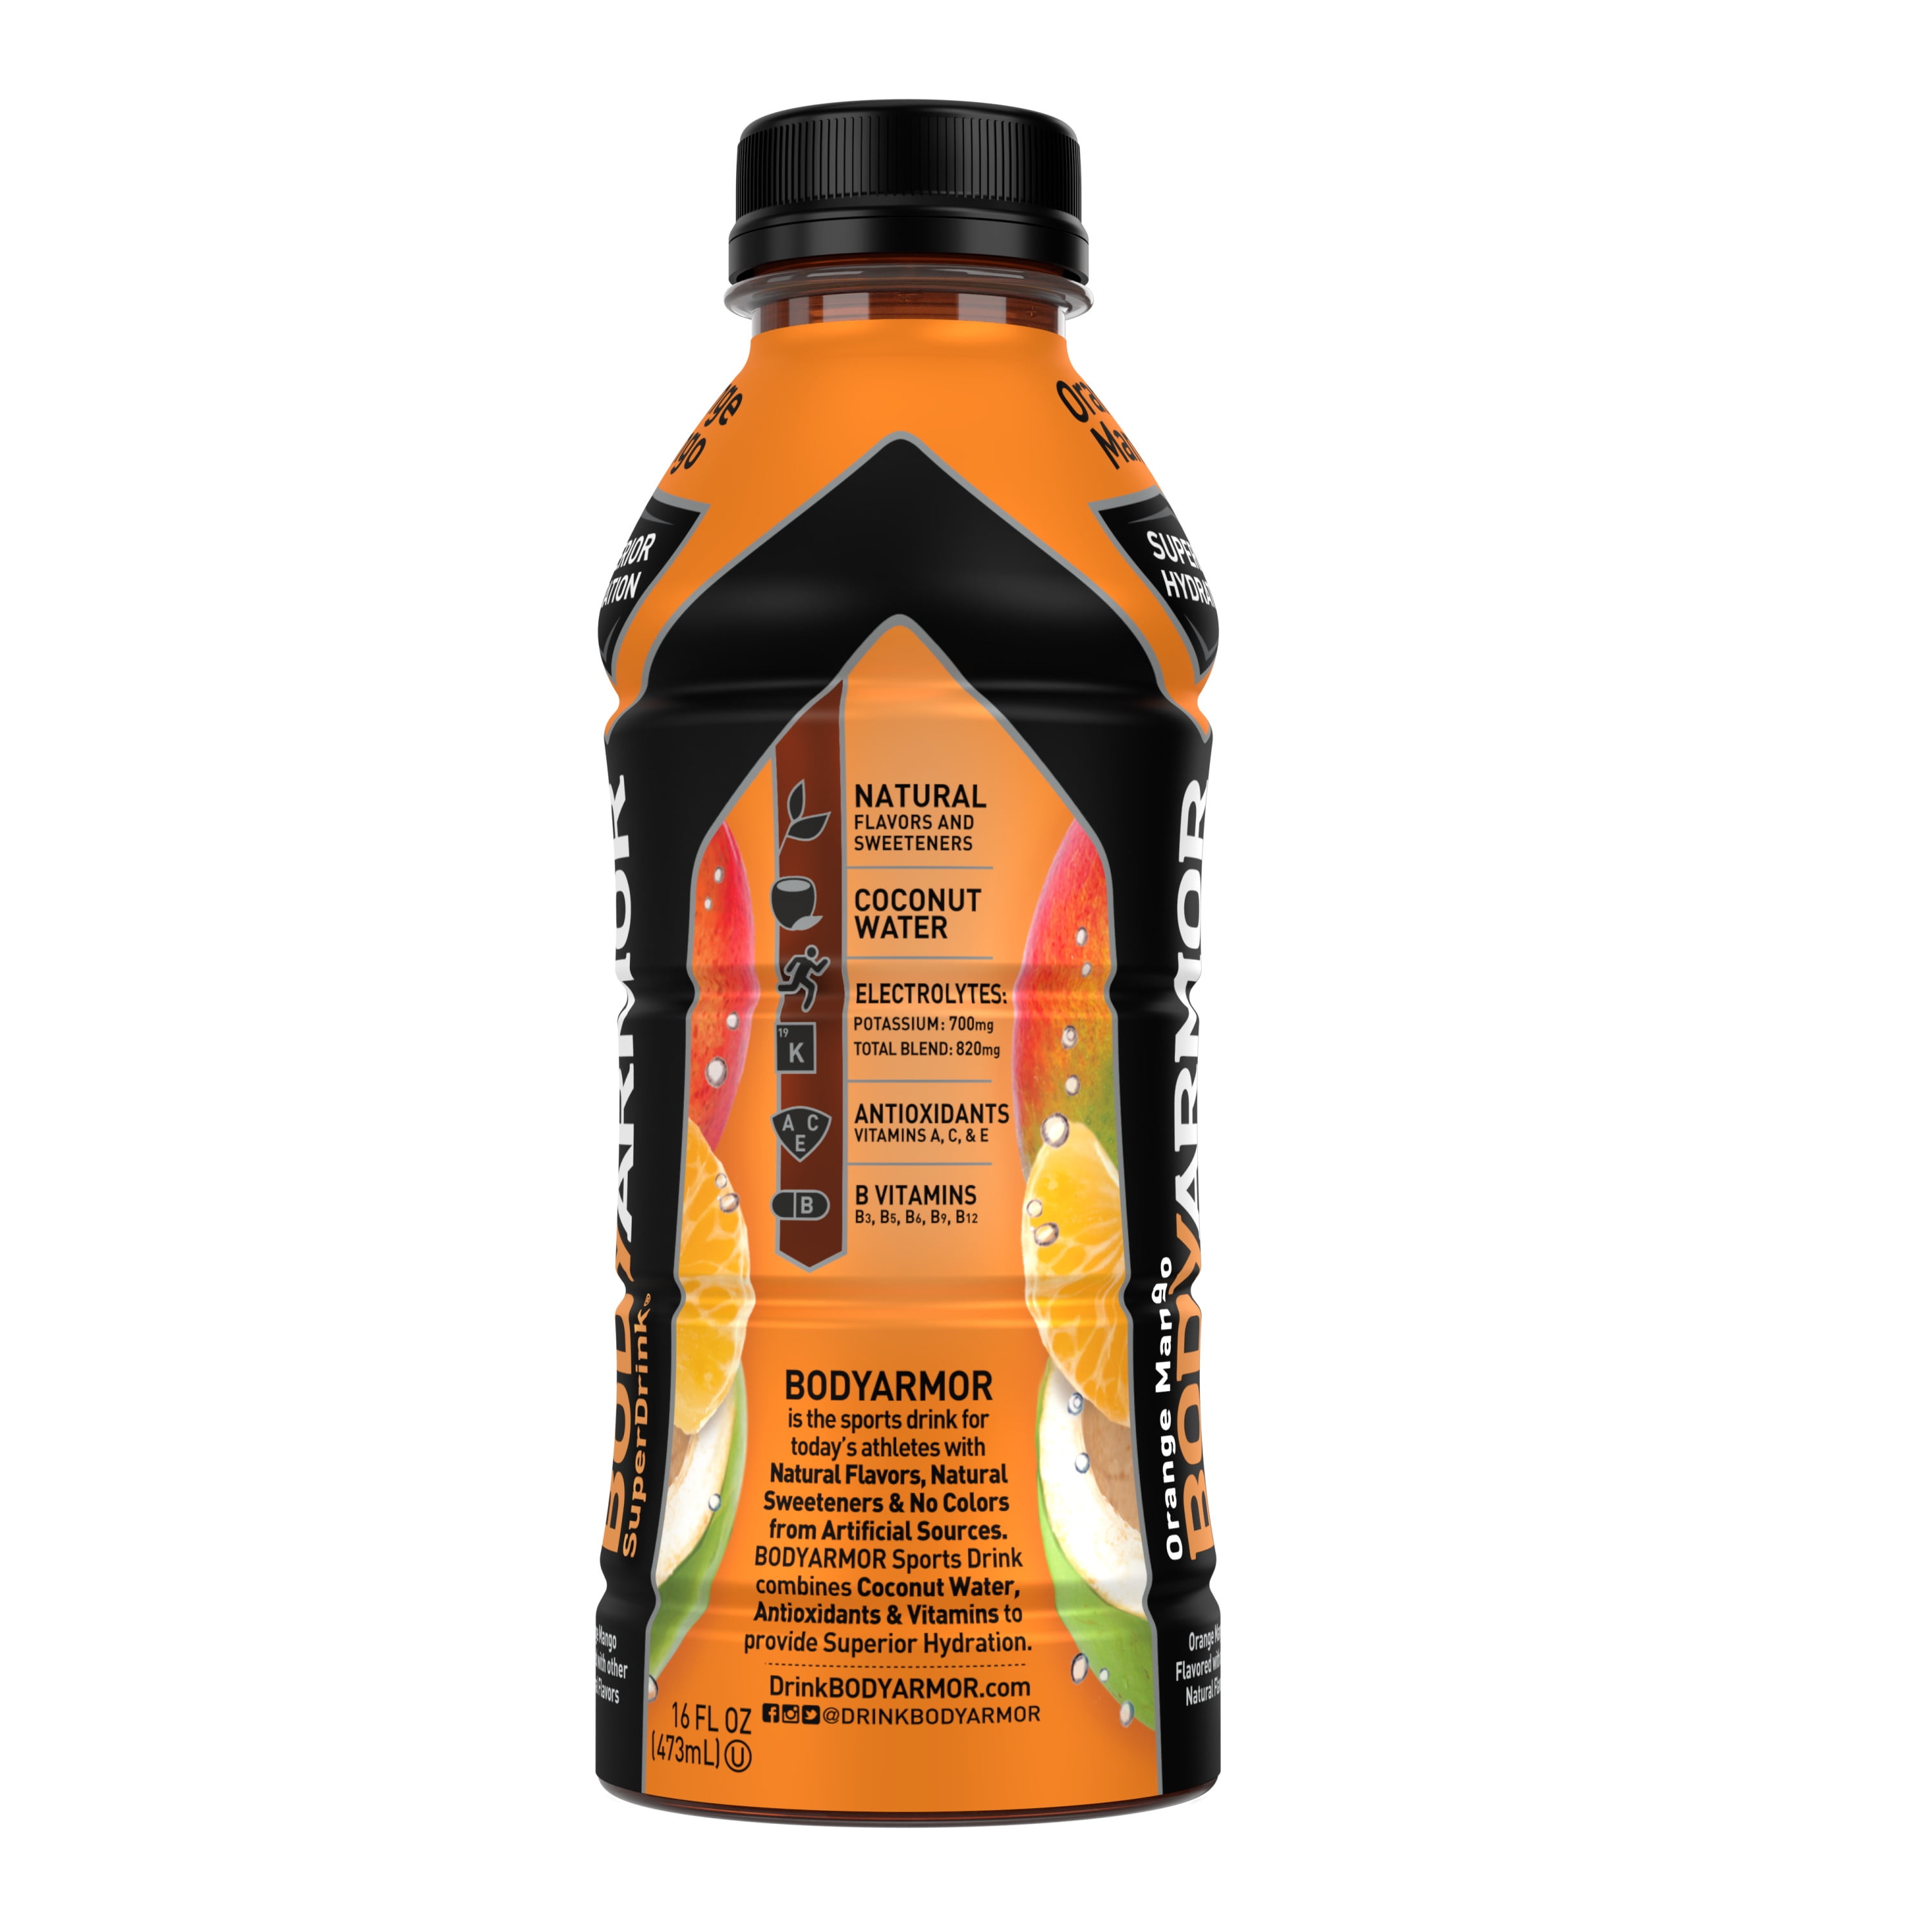 Brand New Reebok UFC Water Bottle; 16 fl oz